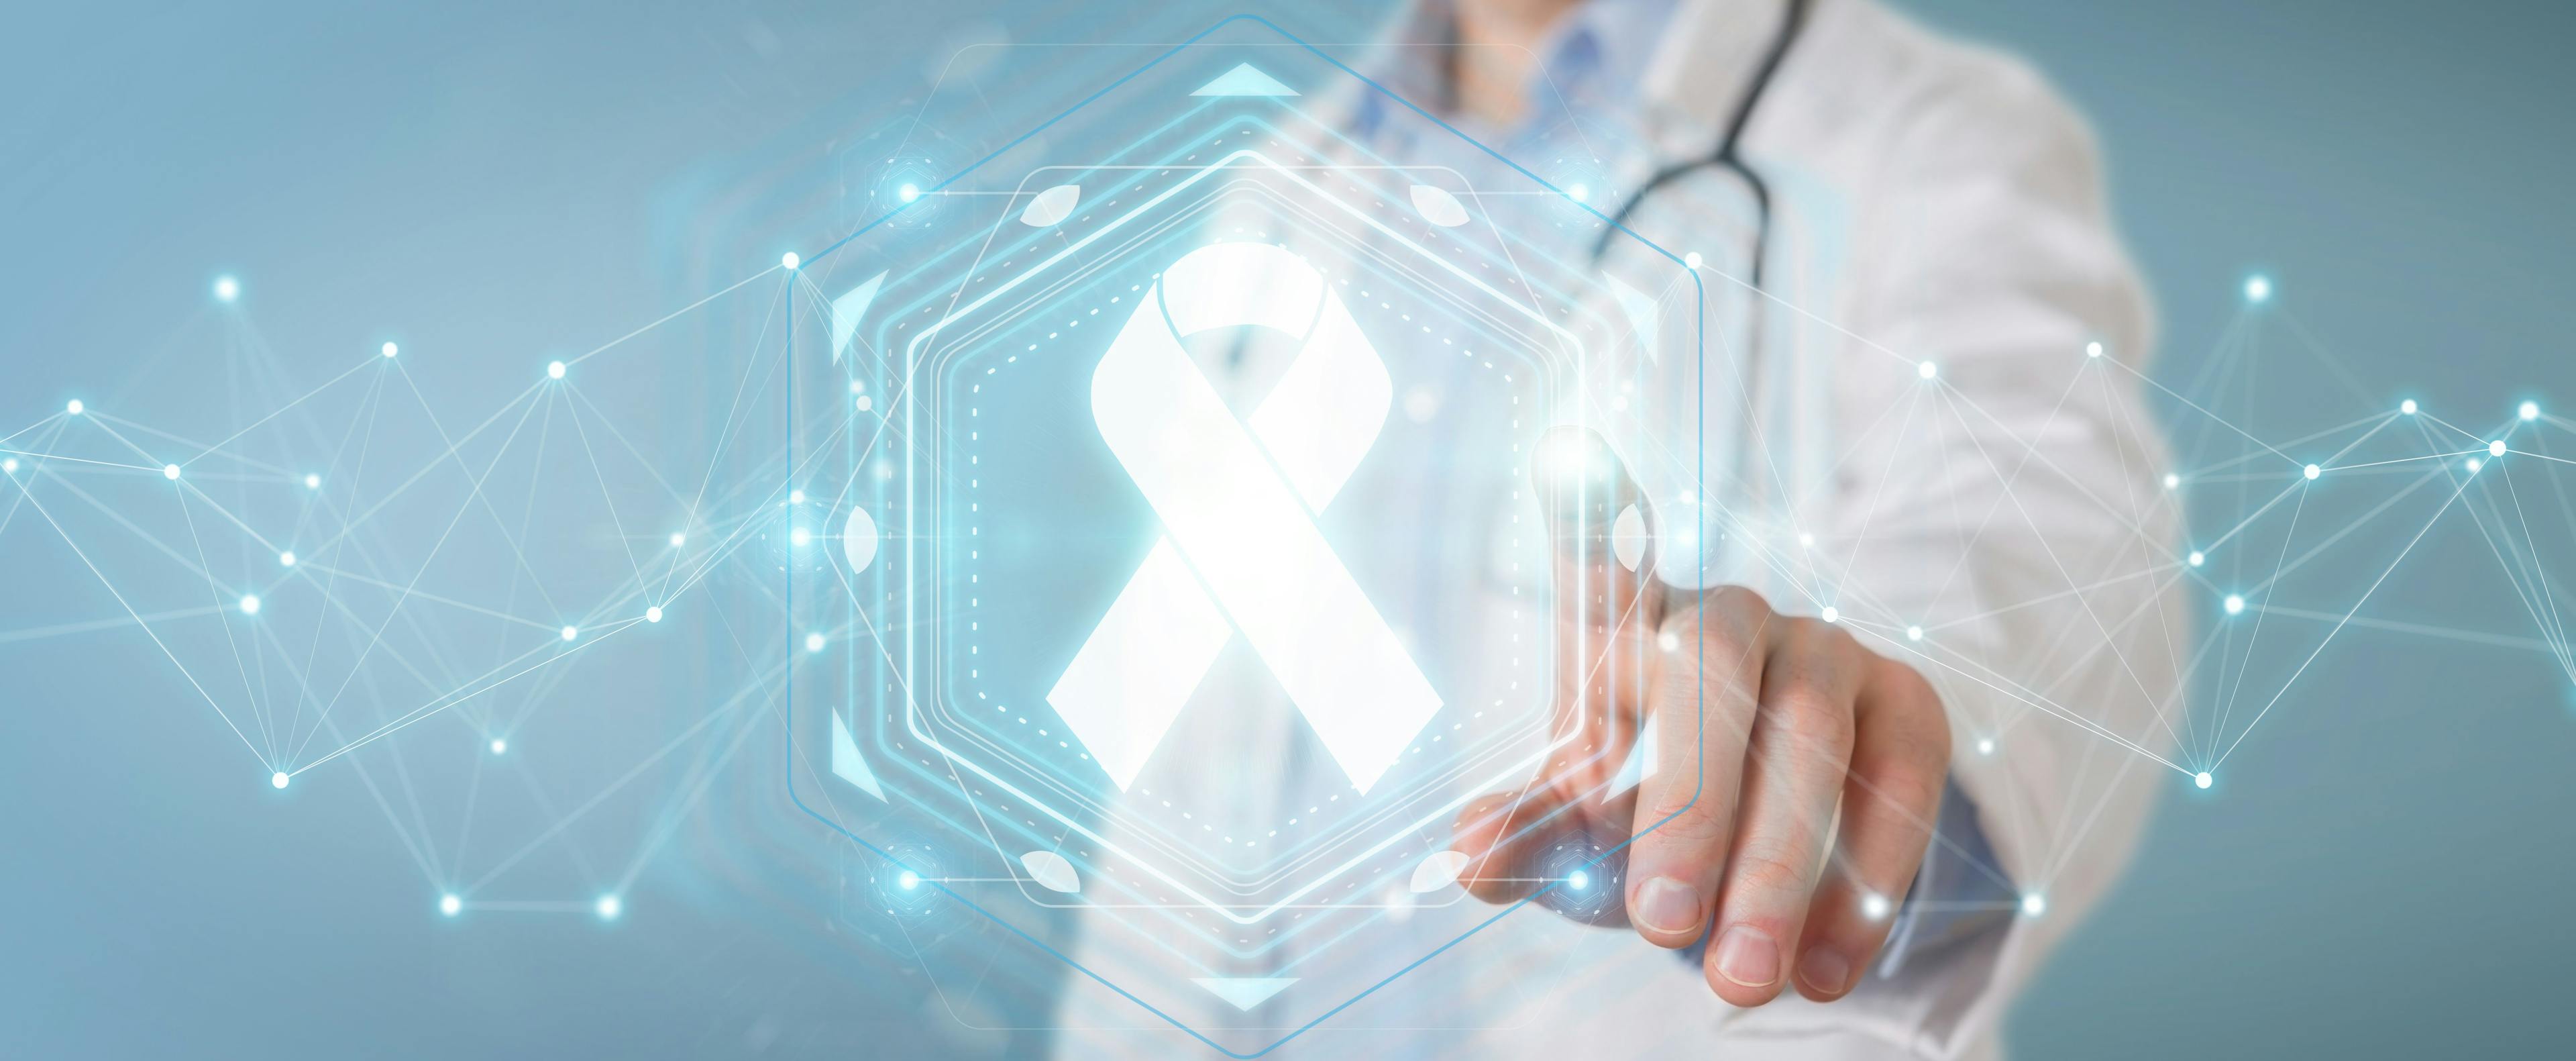 cancer care, cancer survivors, post cancer treatment, [Doctor using digital ribbon cancer interface 3D rendering] | Image Credit: [sdecoret] © Adobe Stock